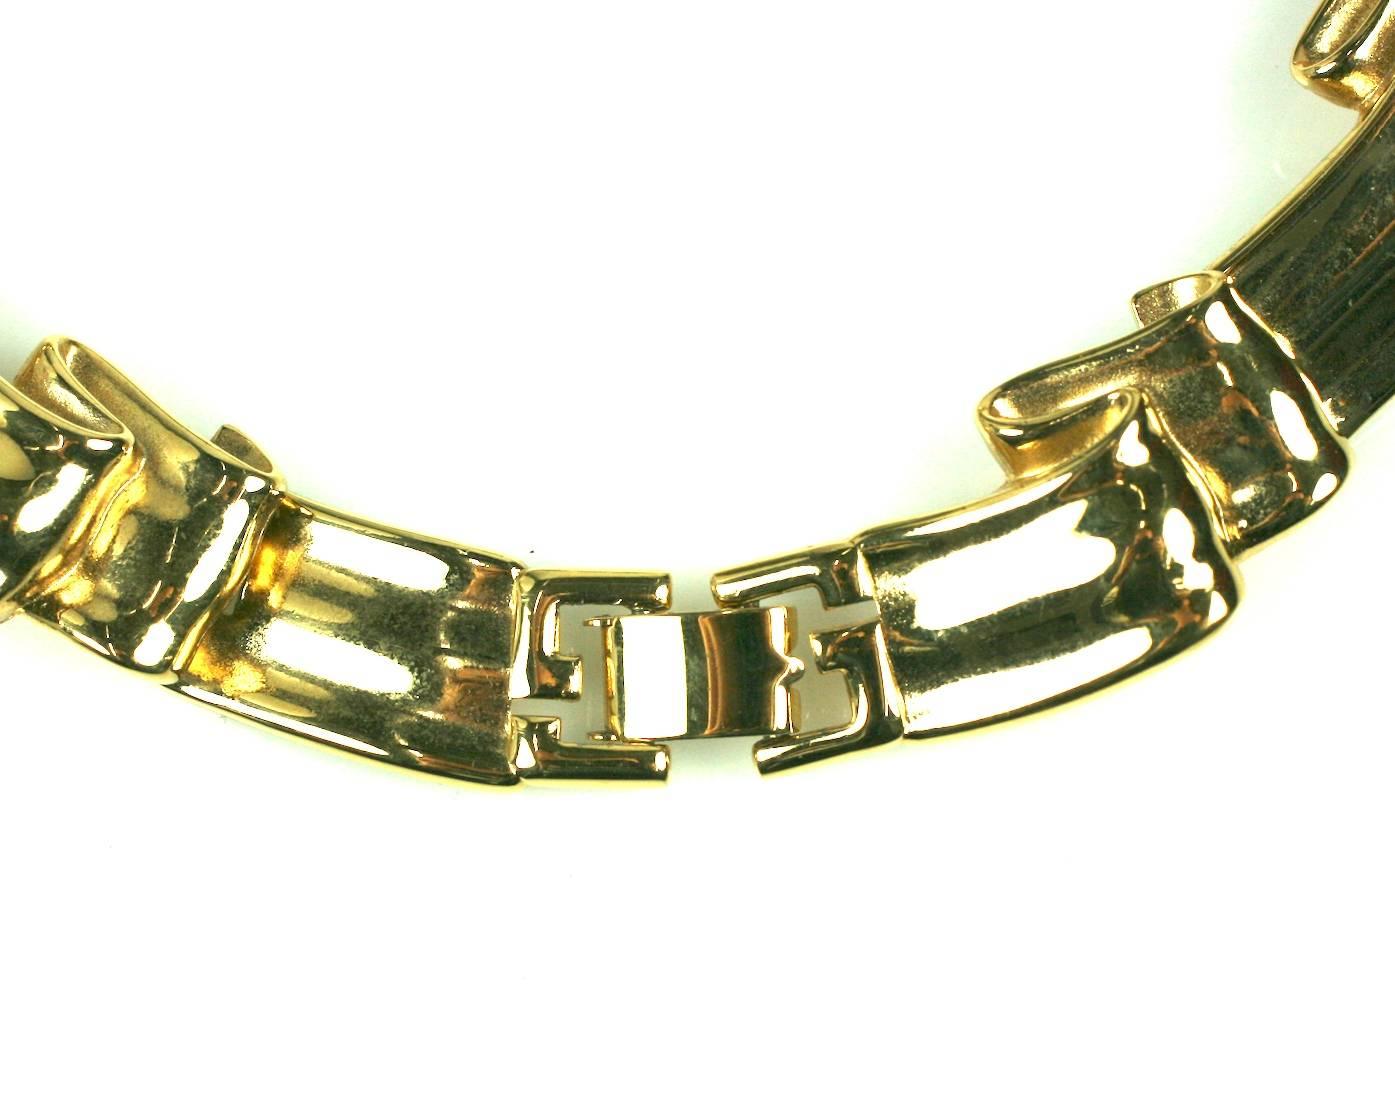 Givenchy undulating links ribbon form necklace of gilt metal. Striking design. 16.5